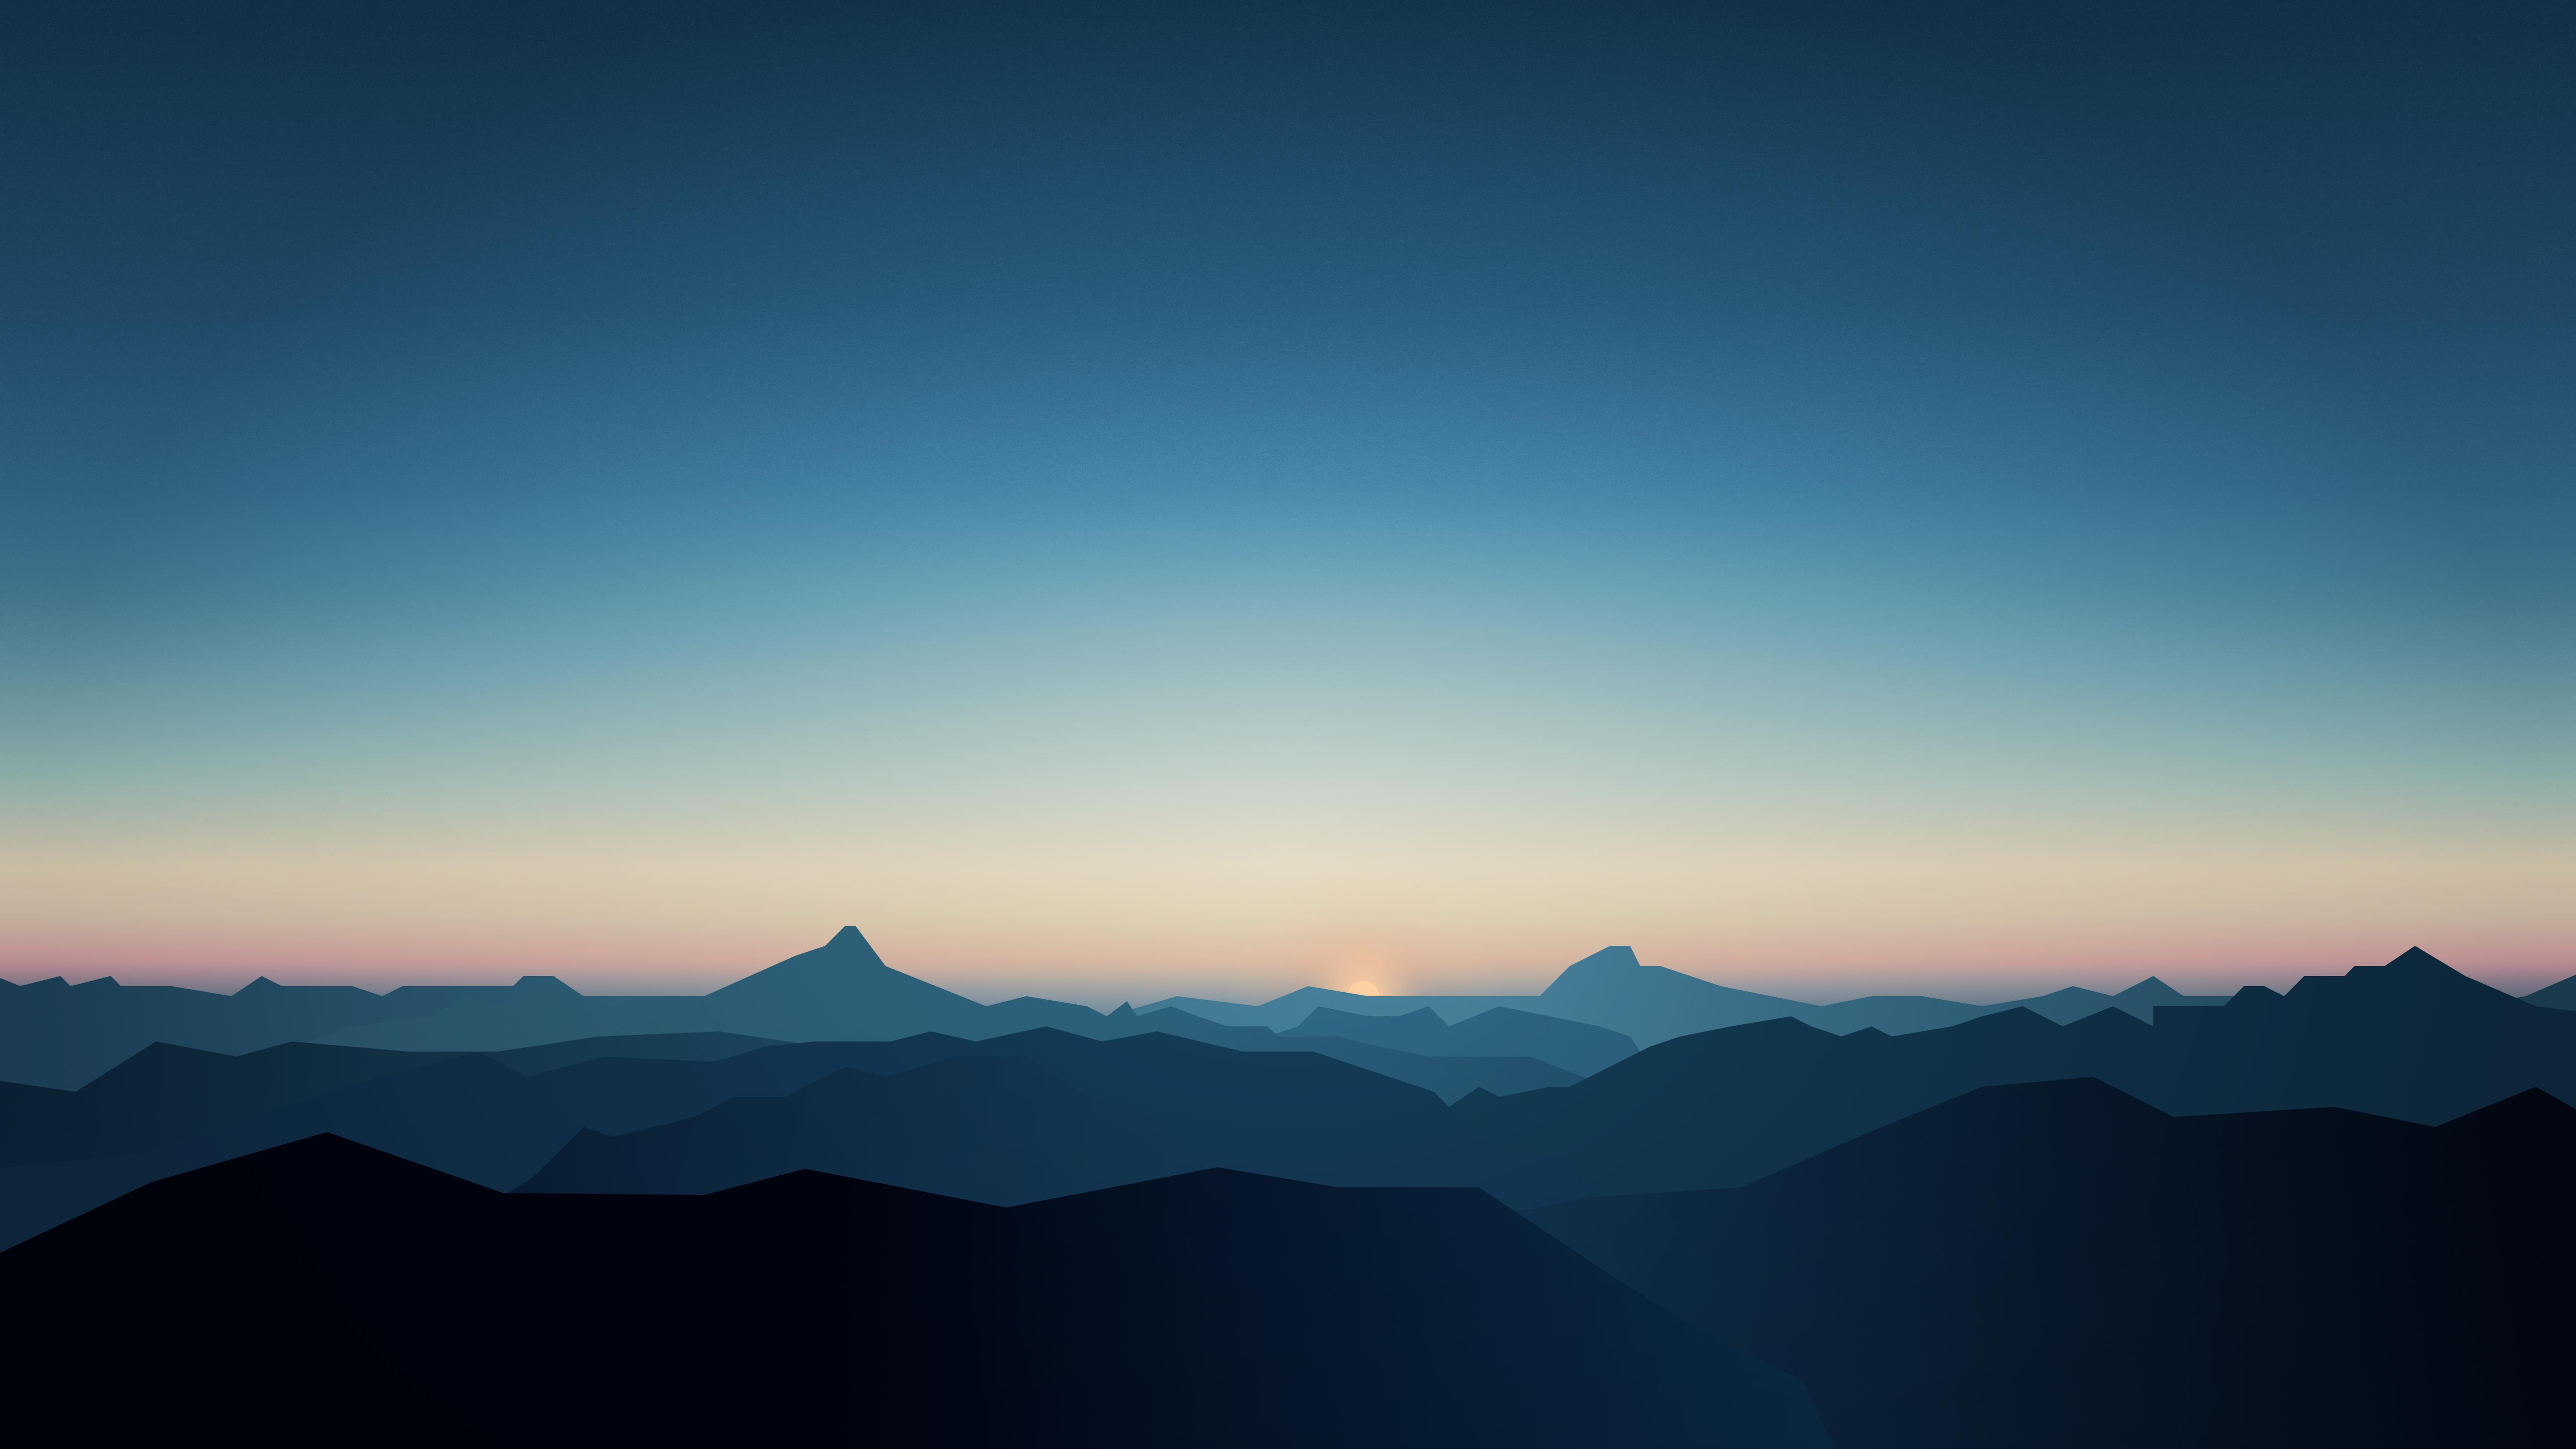 K, #CGI, #Dark, #Mountains, #Sunrise, #Minimal. Creative